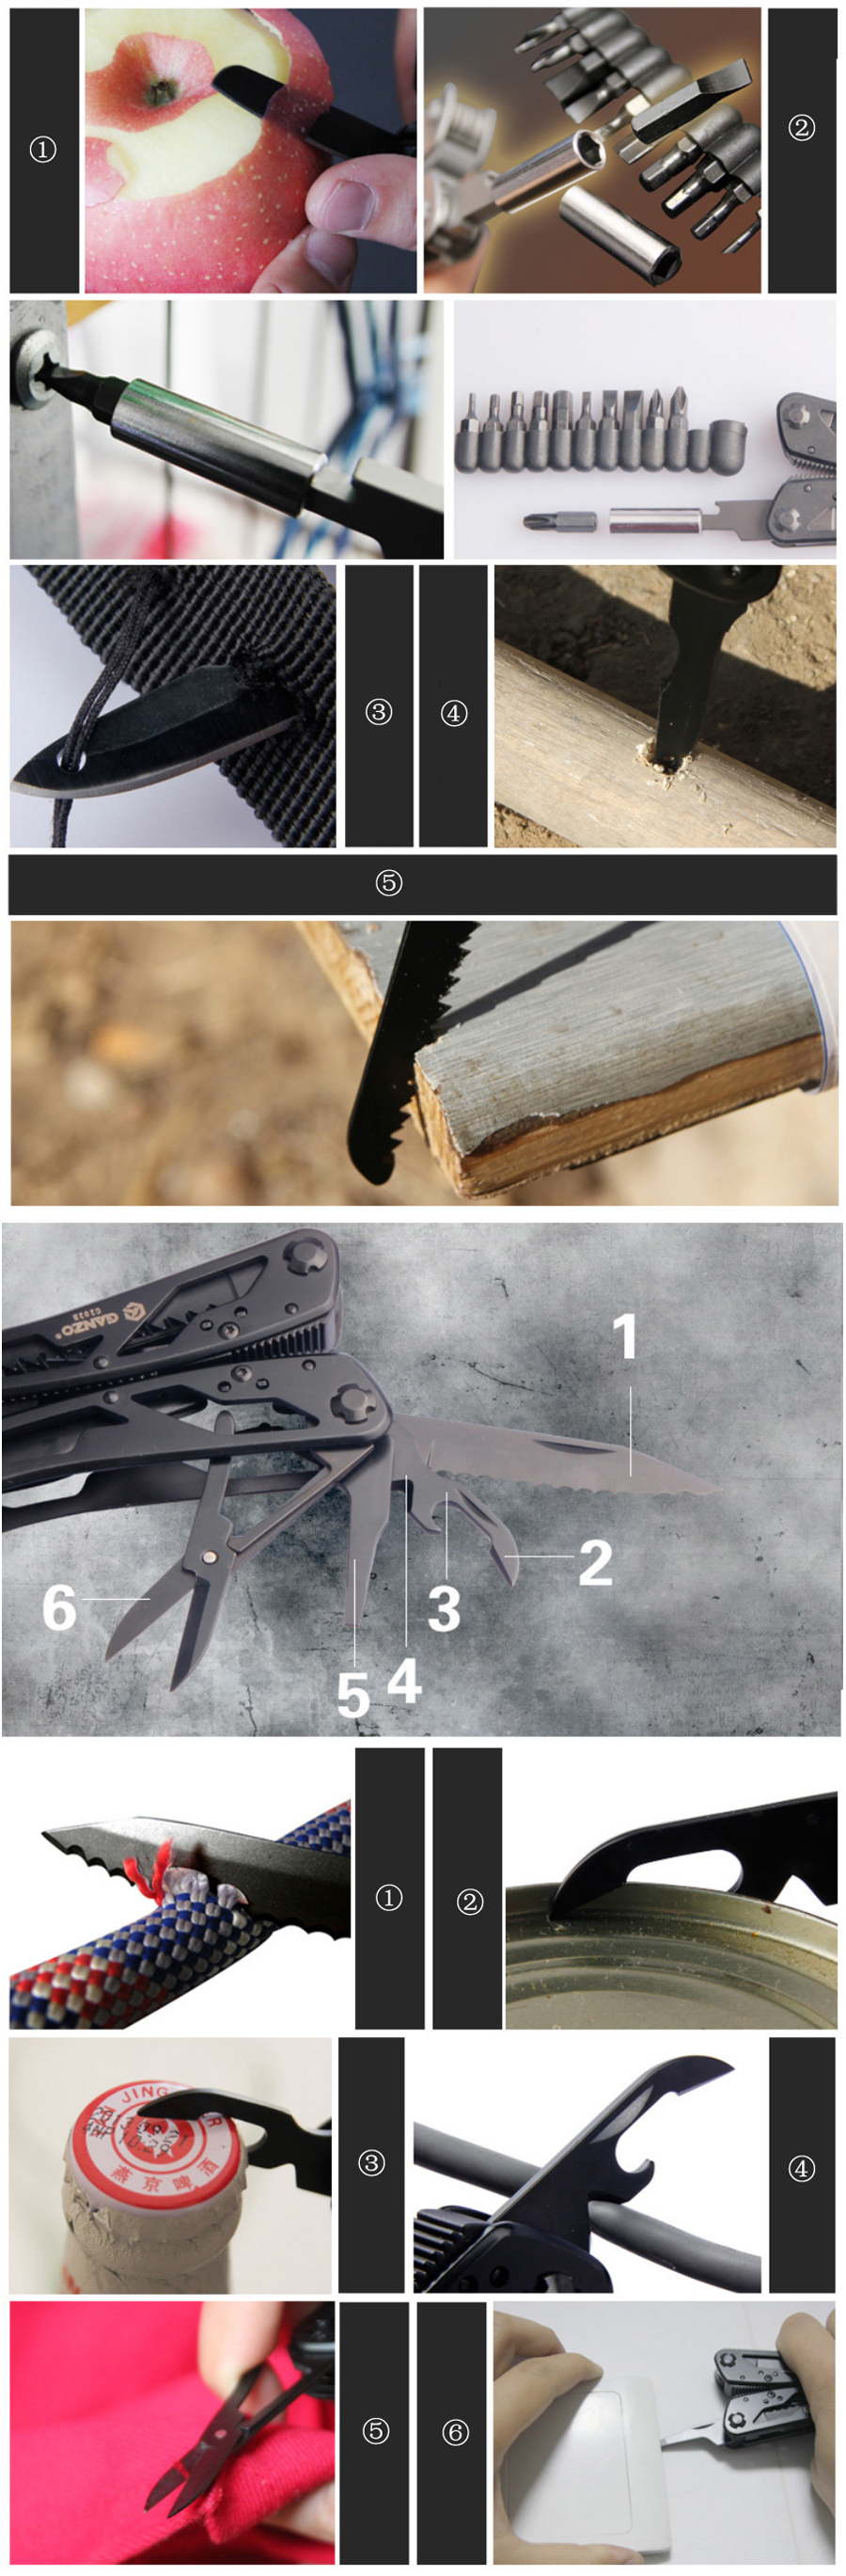 GANZO-G202B-24-in-1-EDC-Knife-Multi-tools-Set-Folding-Pliers-Knife-Pocket-Plier-Crimper-Wire-Cutter--1732908-3